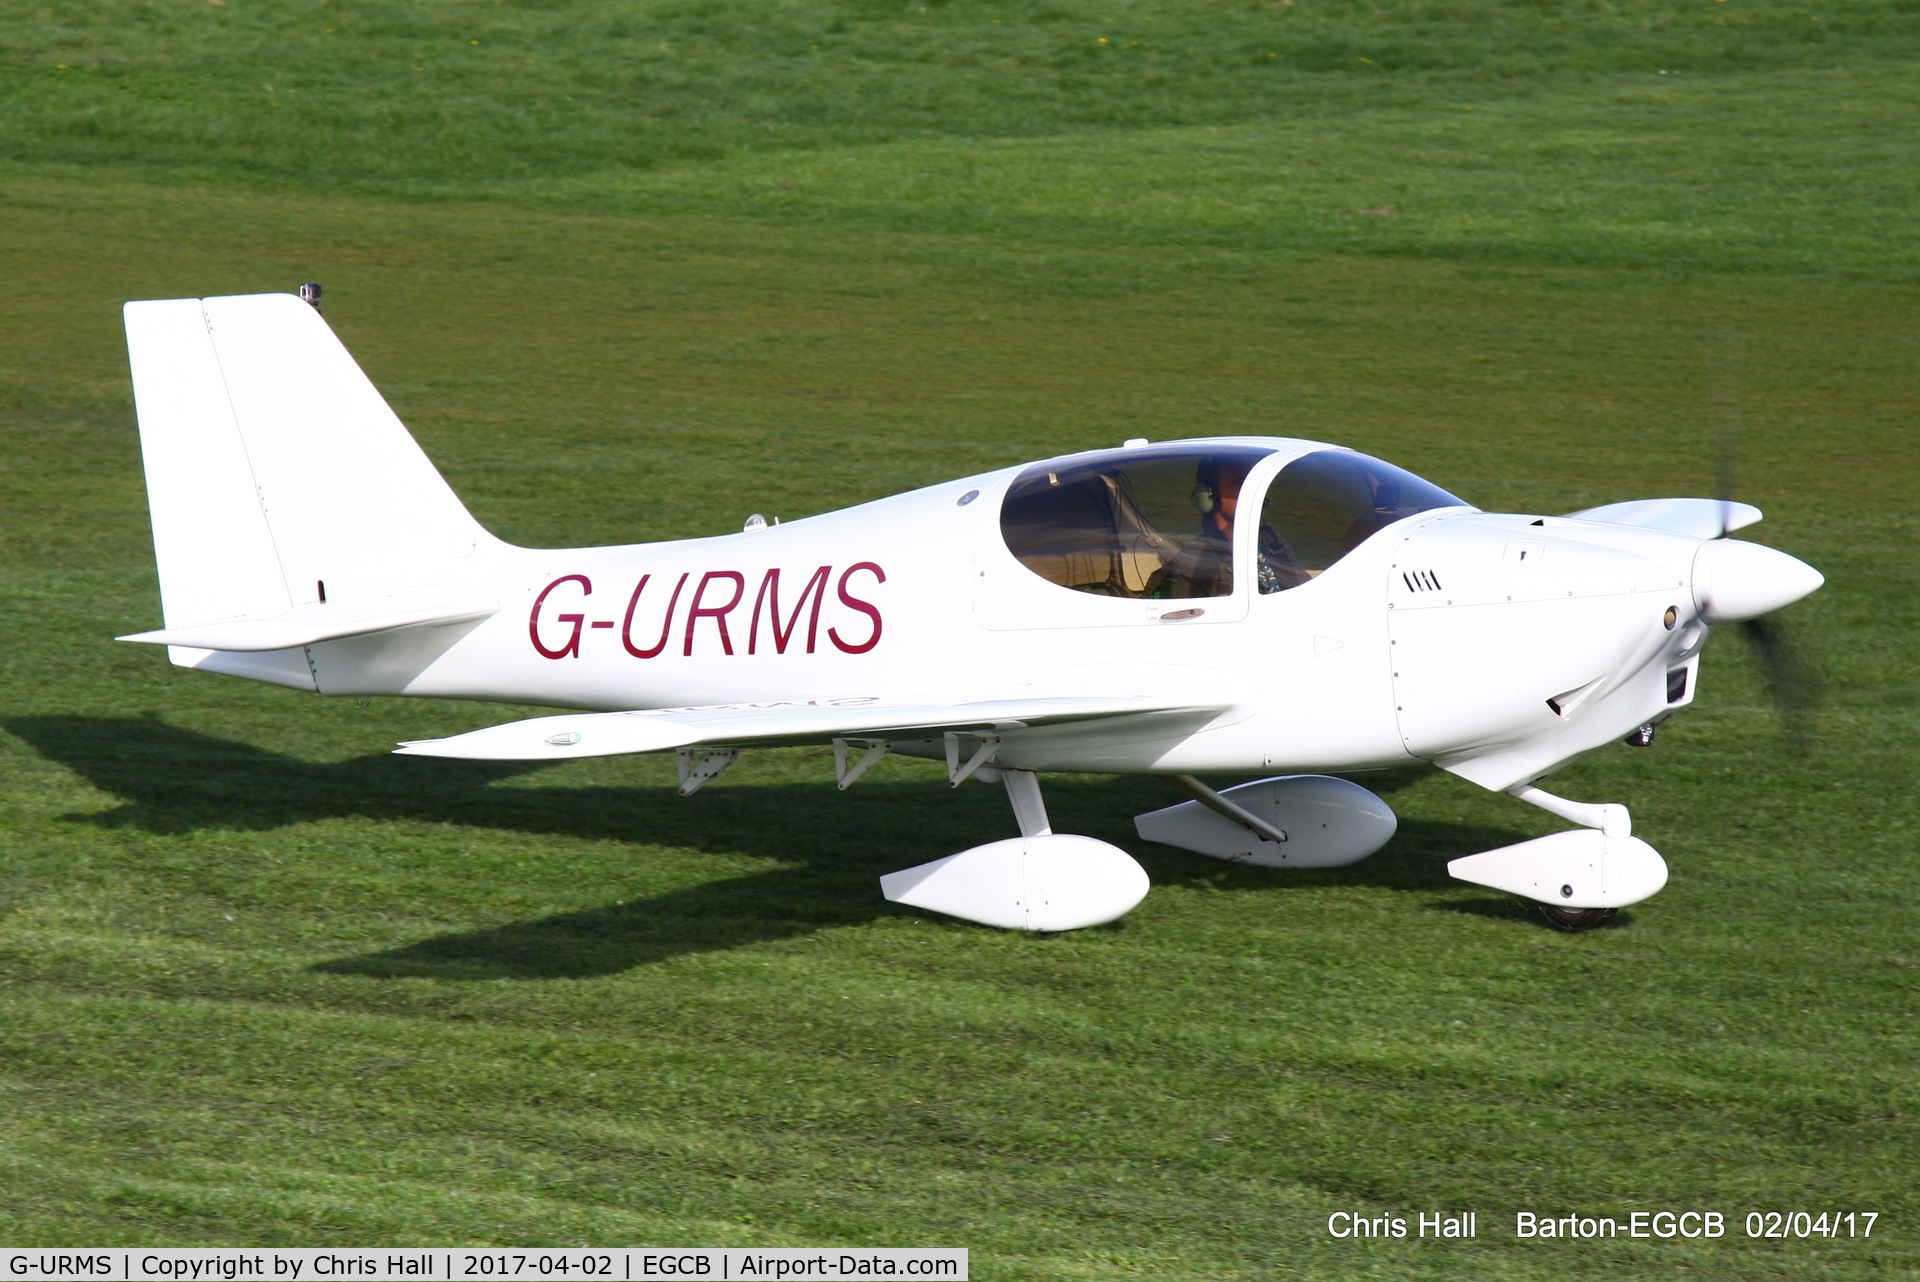 G-URMS, 2005 Europa Tri Gear C/N PFA 247-12922, at Barton